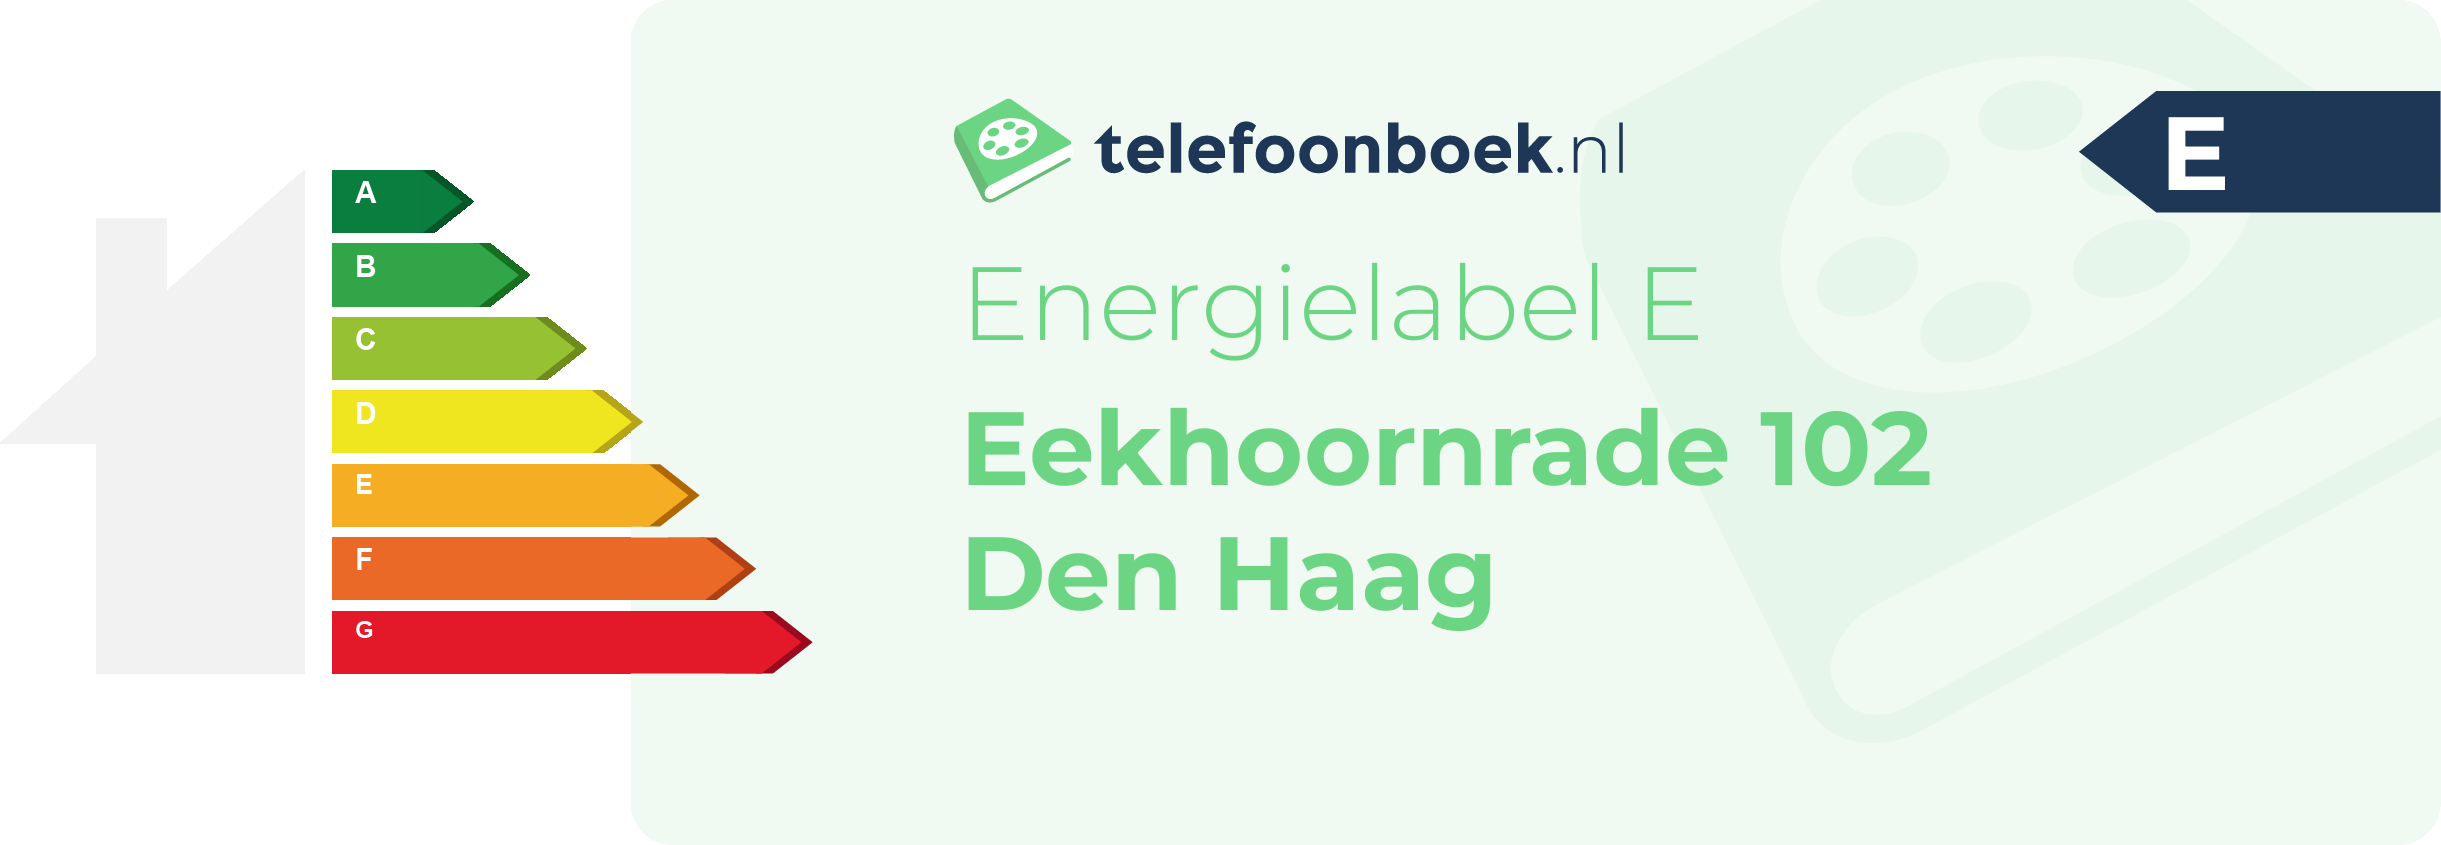 Energielabel Eekhoornrade 102 Den Haag